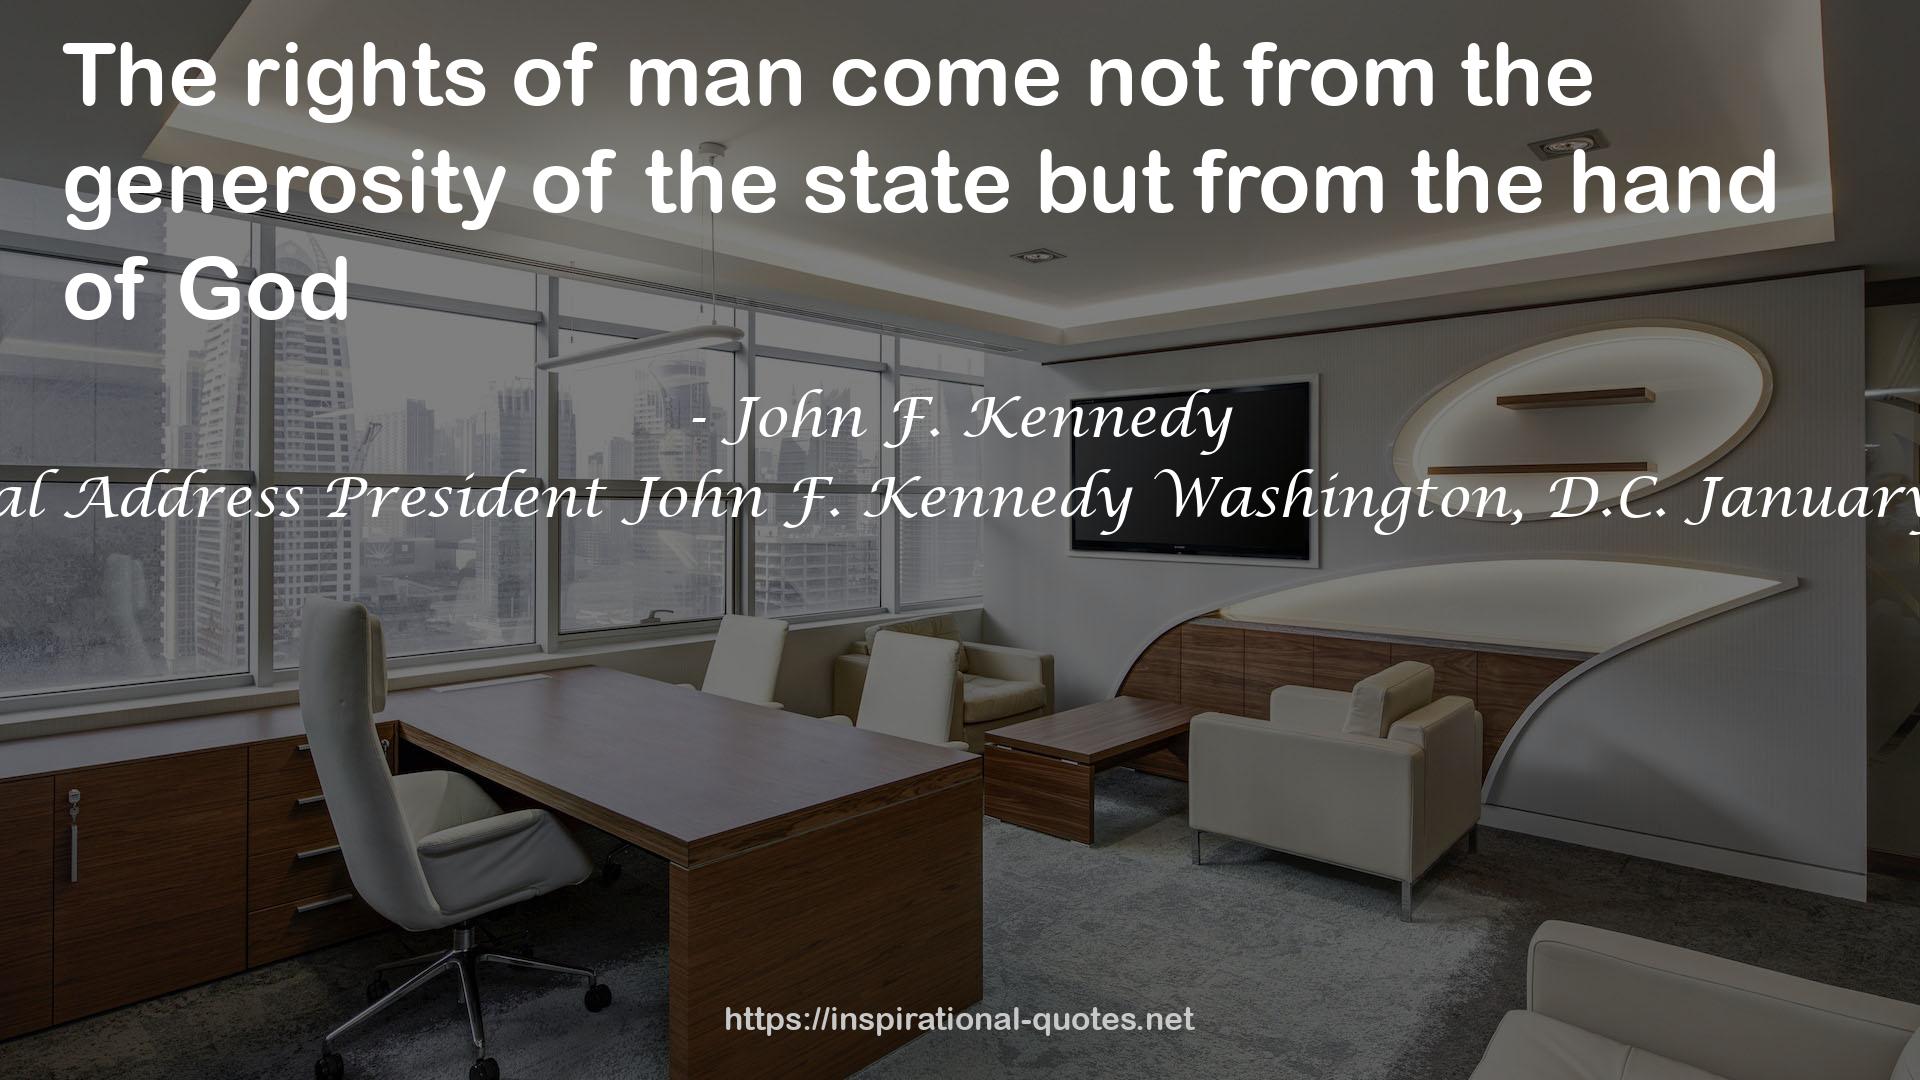 Inaugural Address President John F. Kennedy Washington, D.C. January 20, 1961 QUOTES